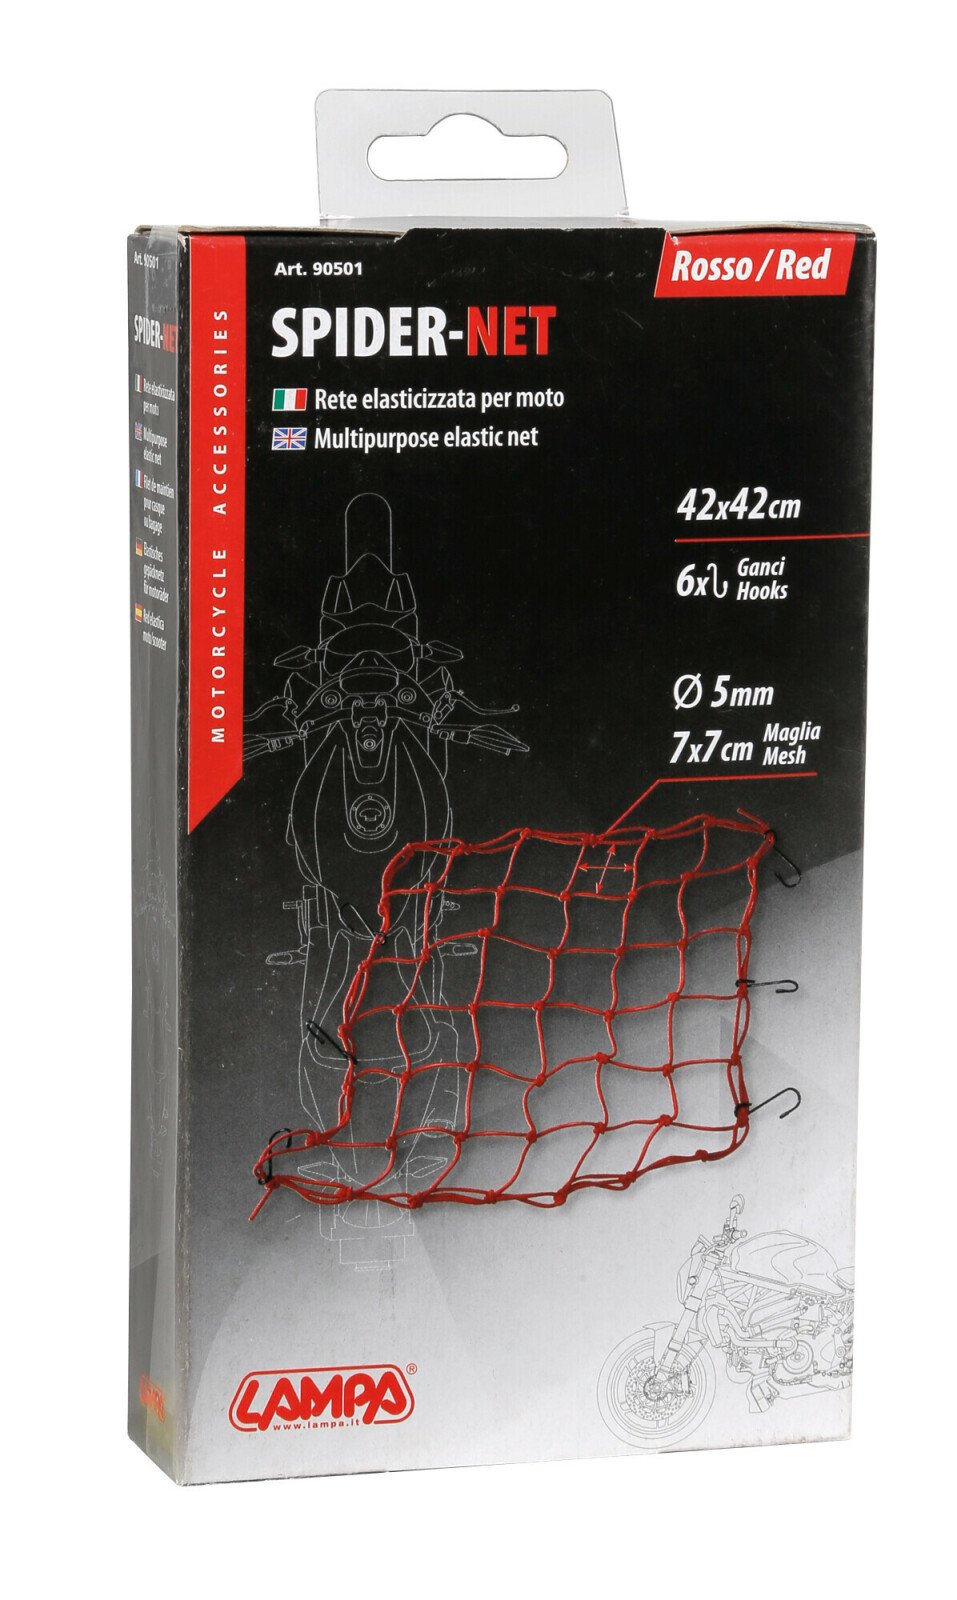 Spider, multipurpose elastic net - Red thumb